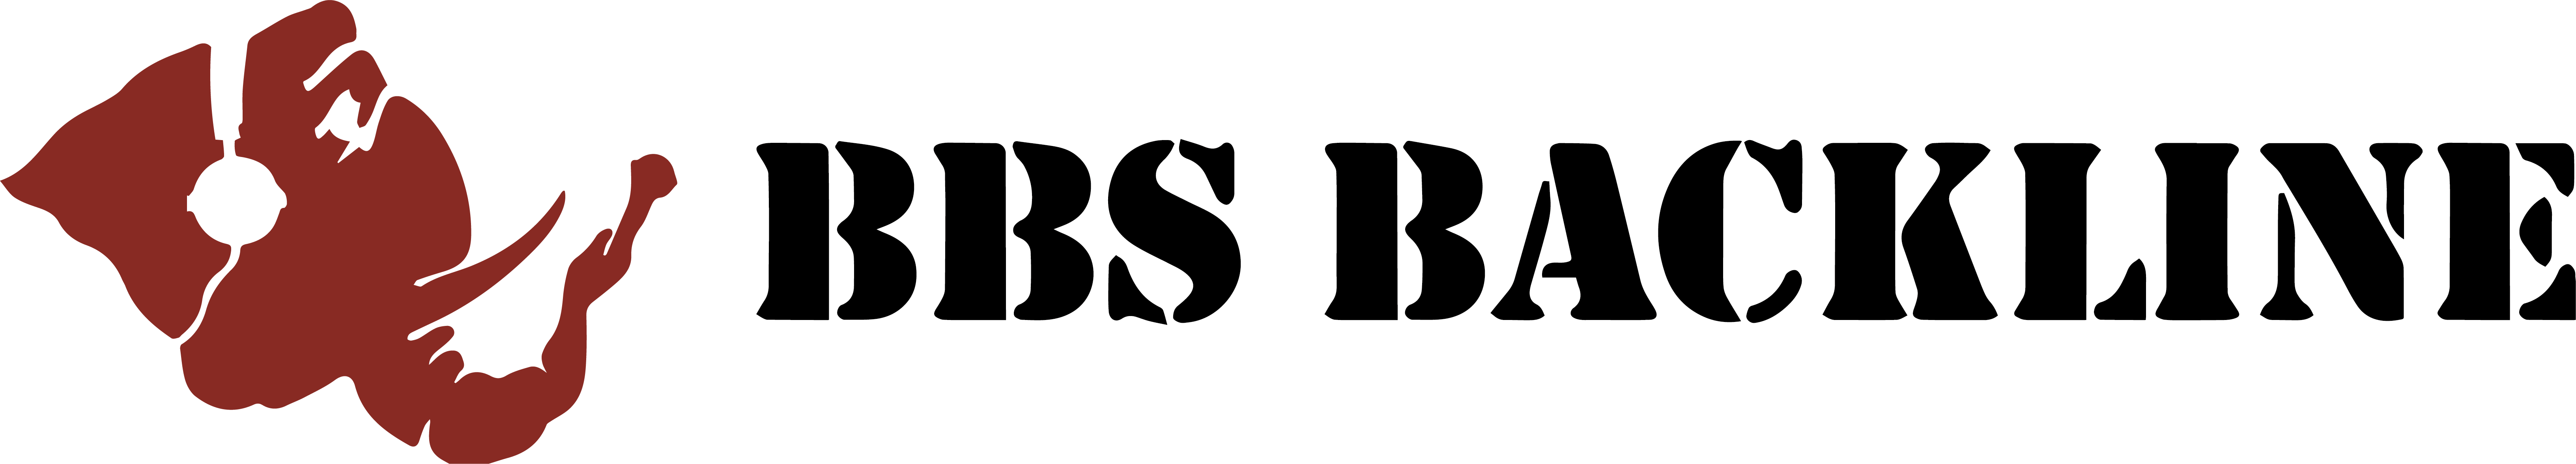 logo bbs backline